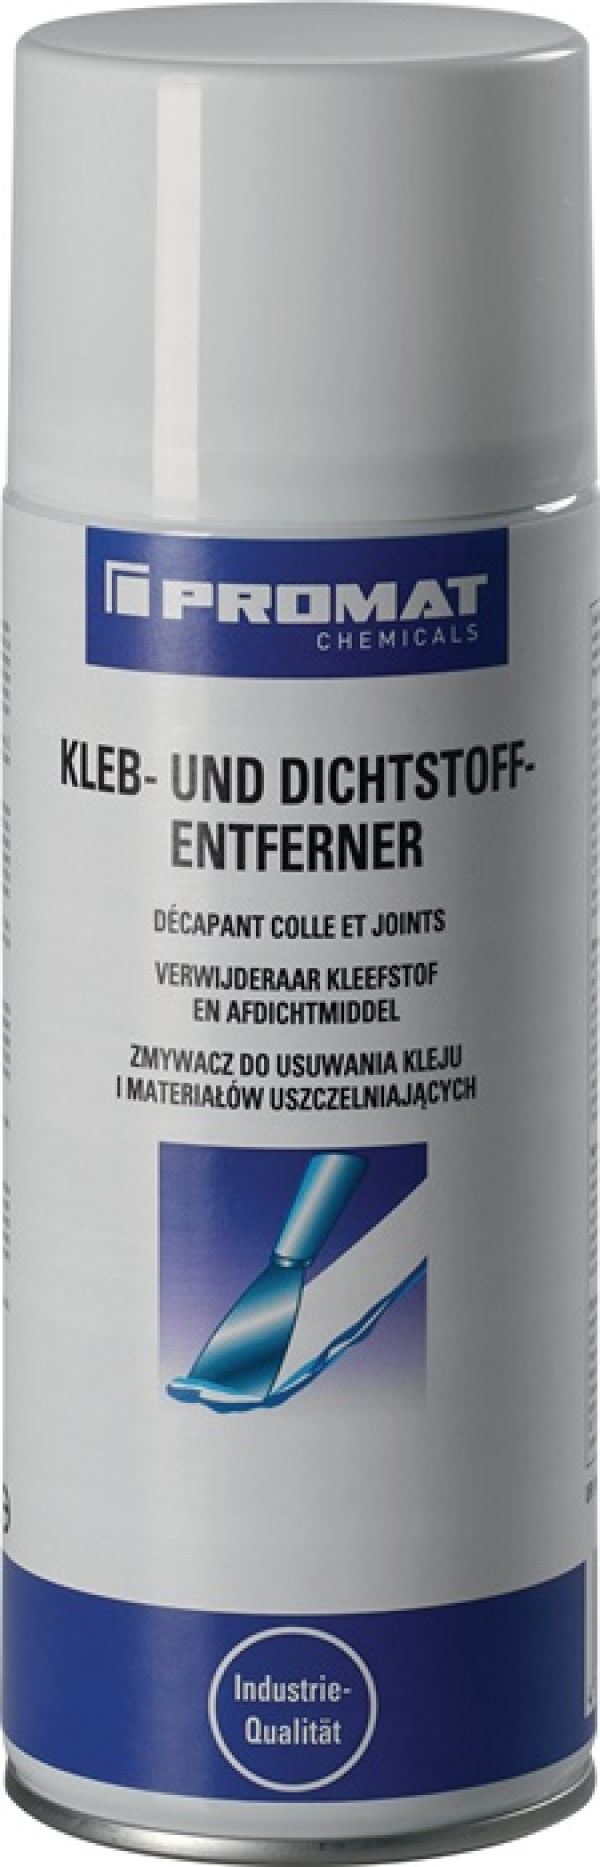 Kleb-/Dichtstoffentferner 400 ml Spraydose PROMAT chemicals